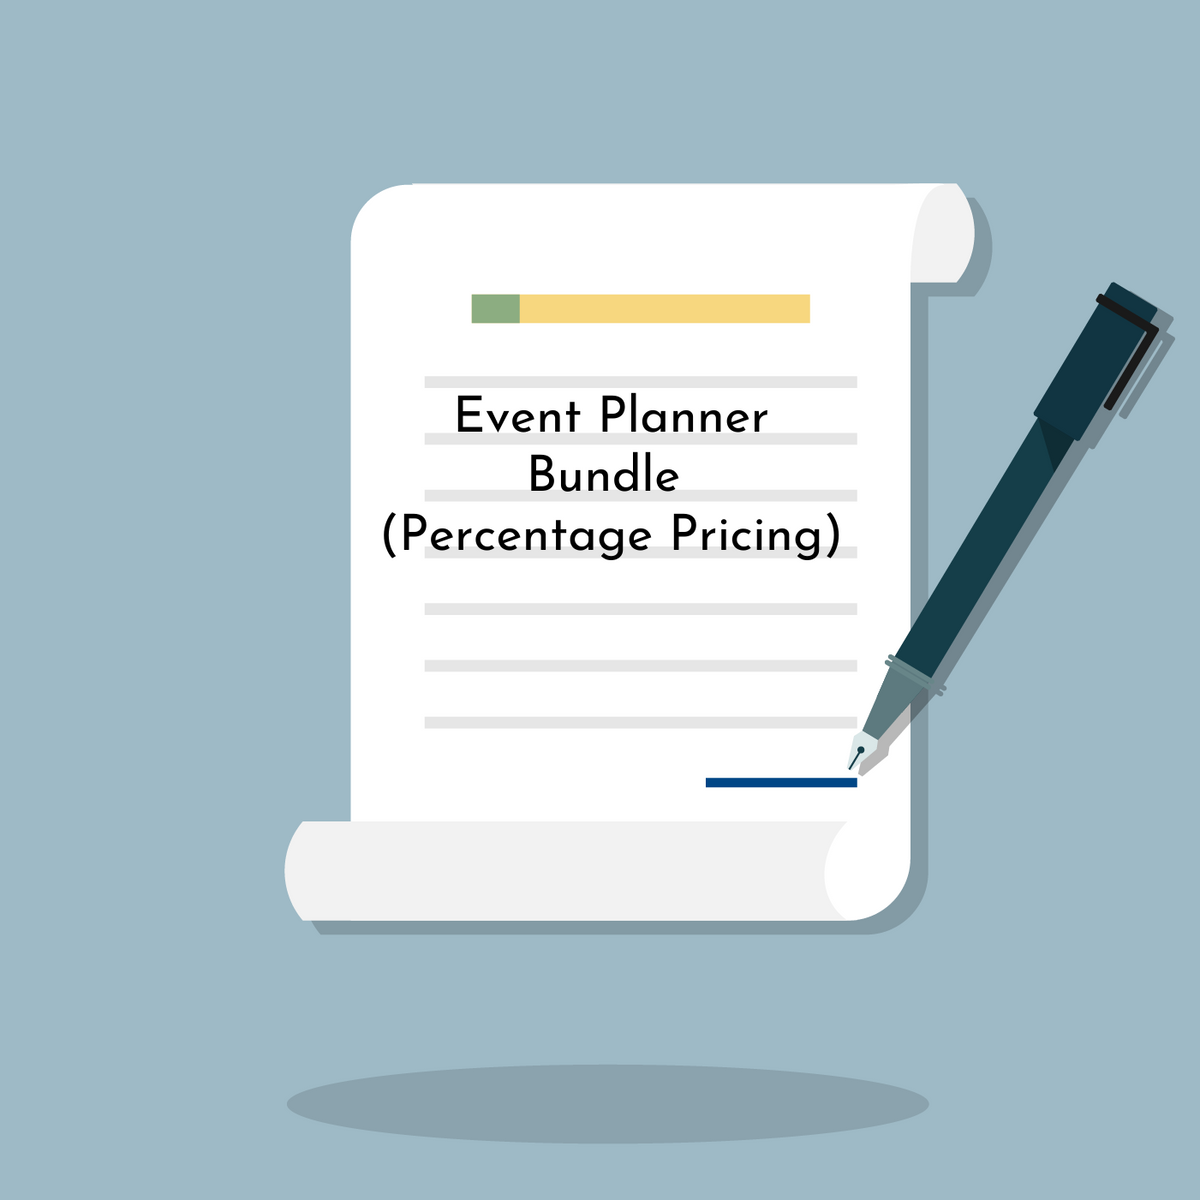 Event Planner Bundle (Percentage Pricing)